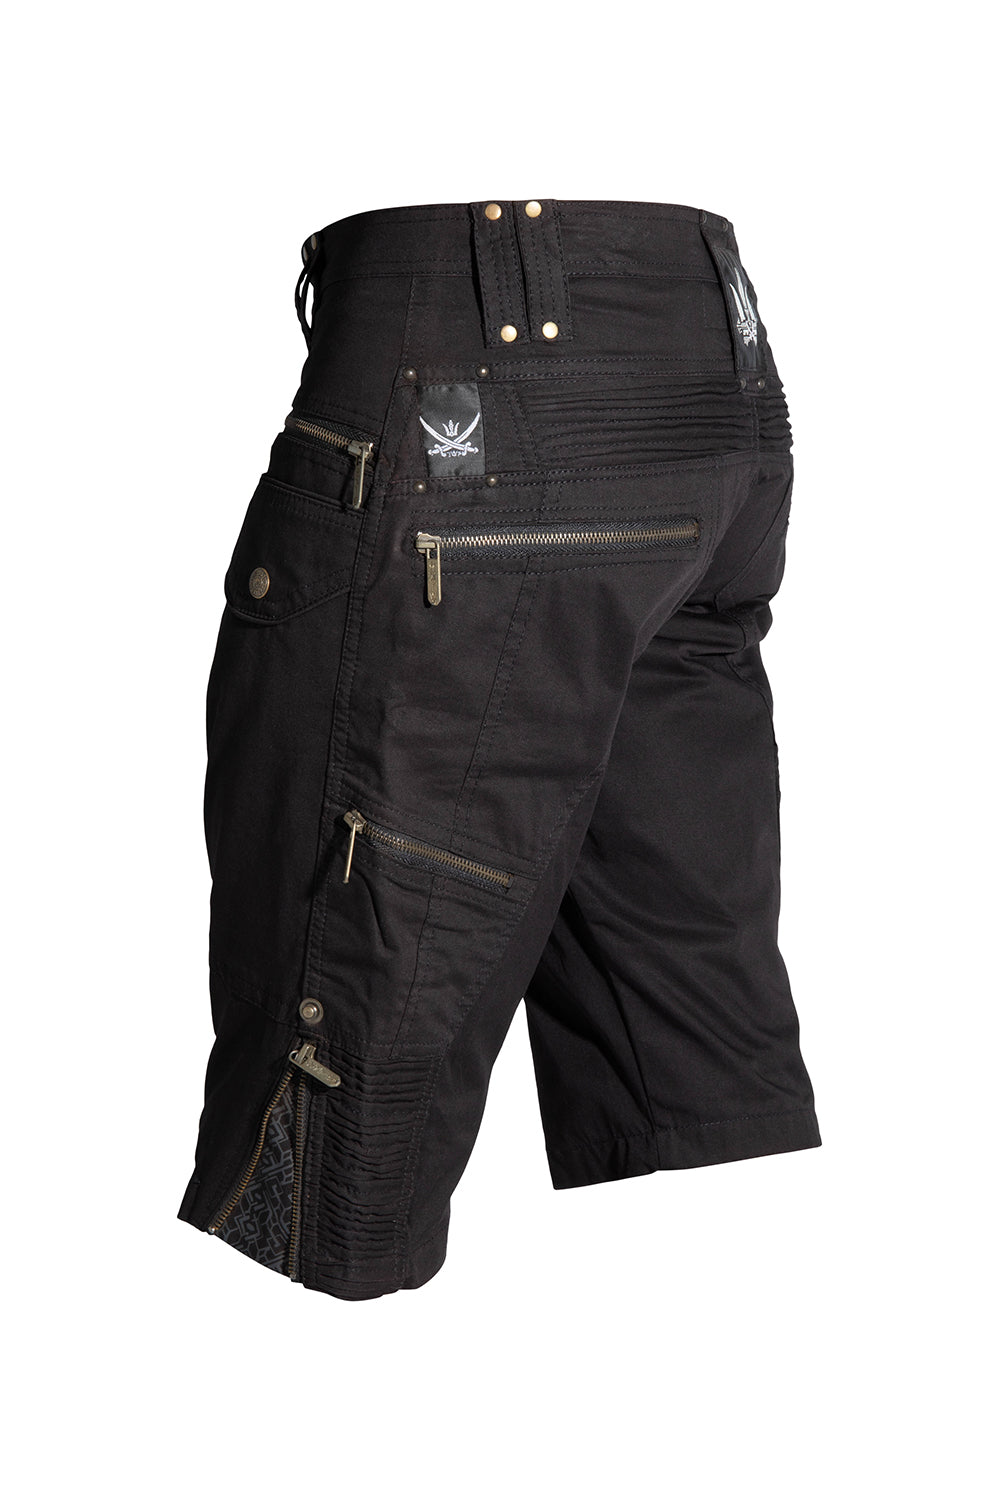 Men's Shorts - Festival Clothing - Cargo Shorts - Burning Man – Etnix